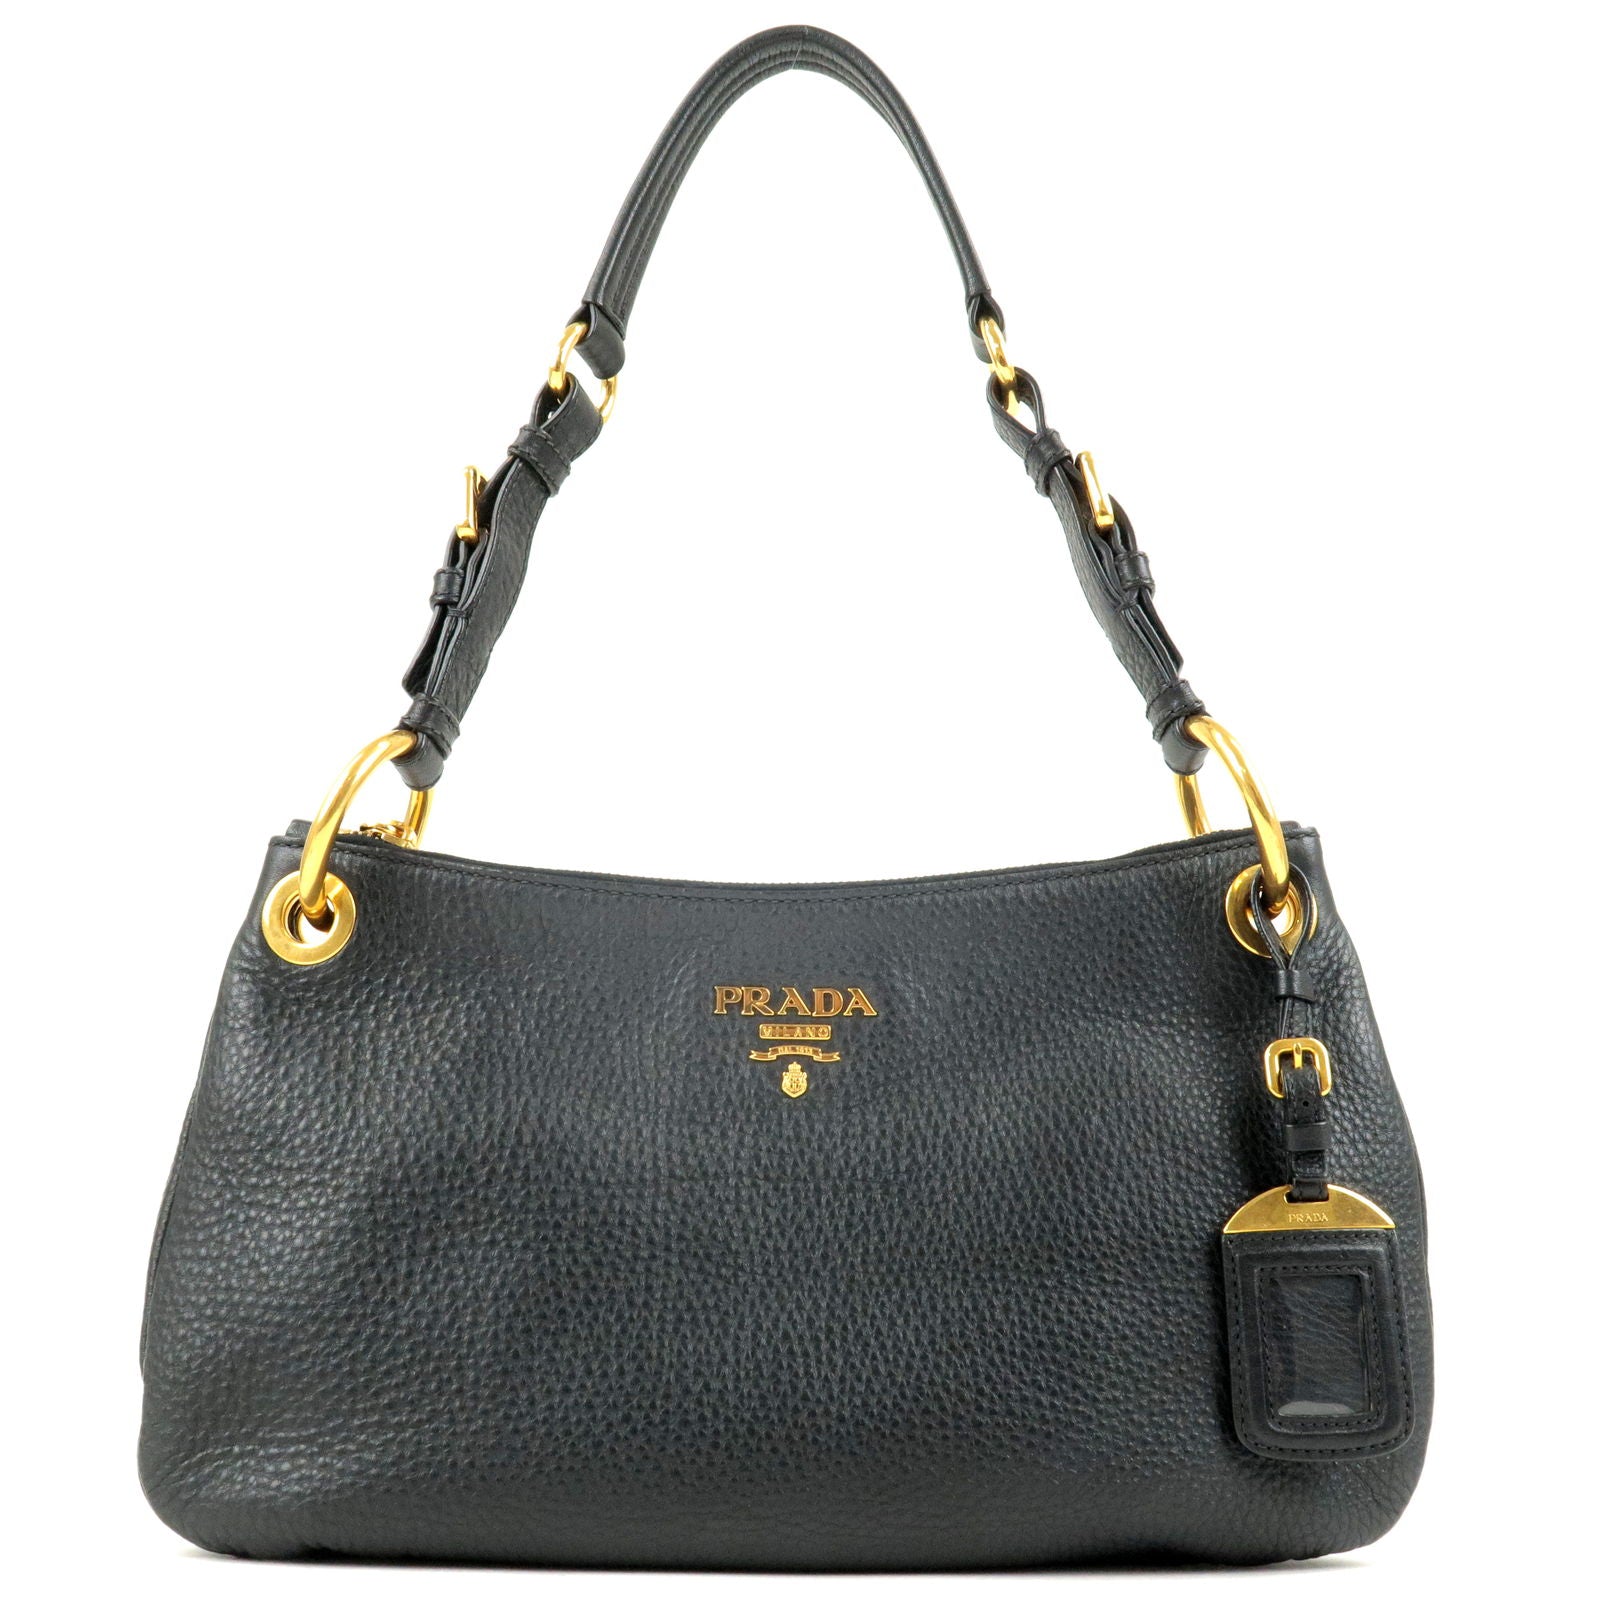 PRADA-Logo-Leather-One-Shoulder-Bag-Black-Nero-Gold-HDW